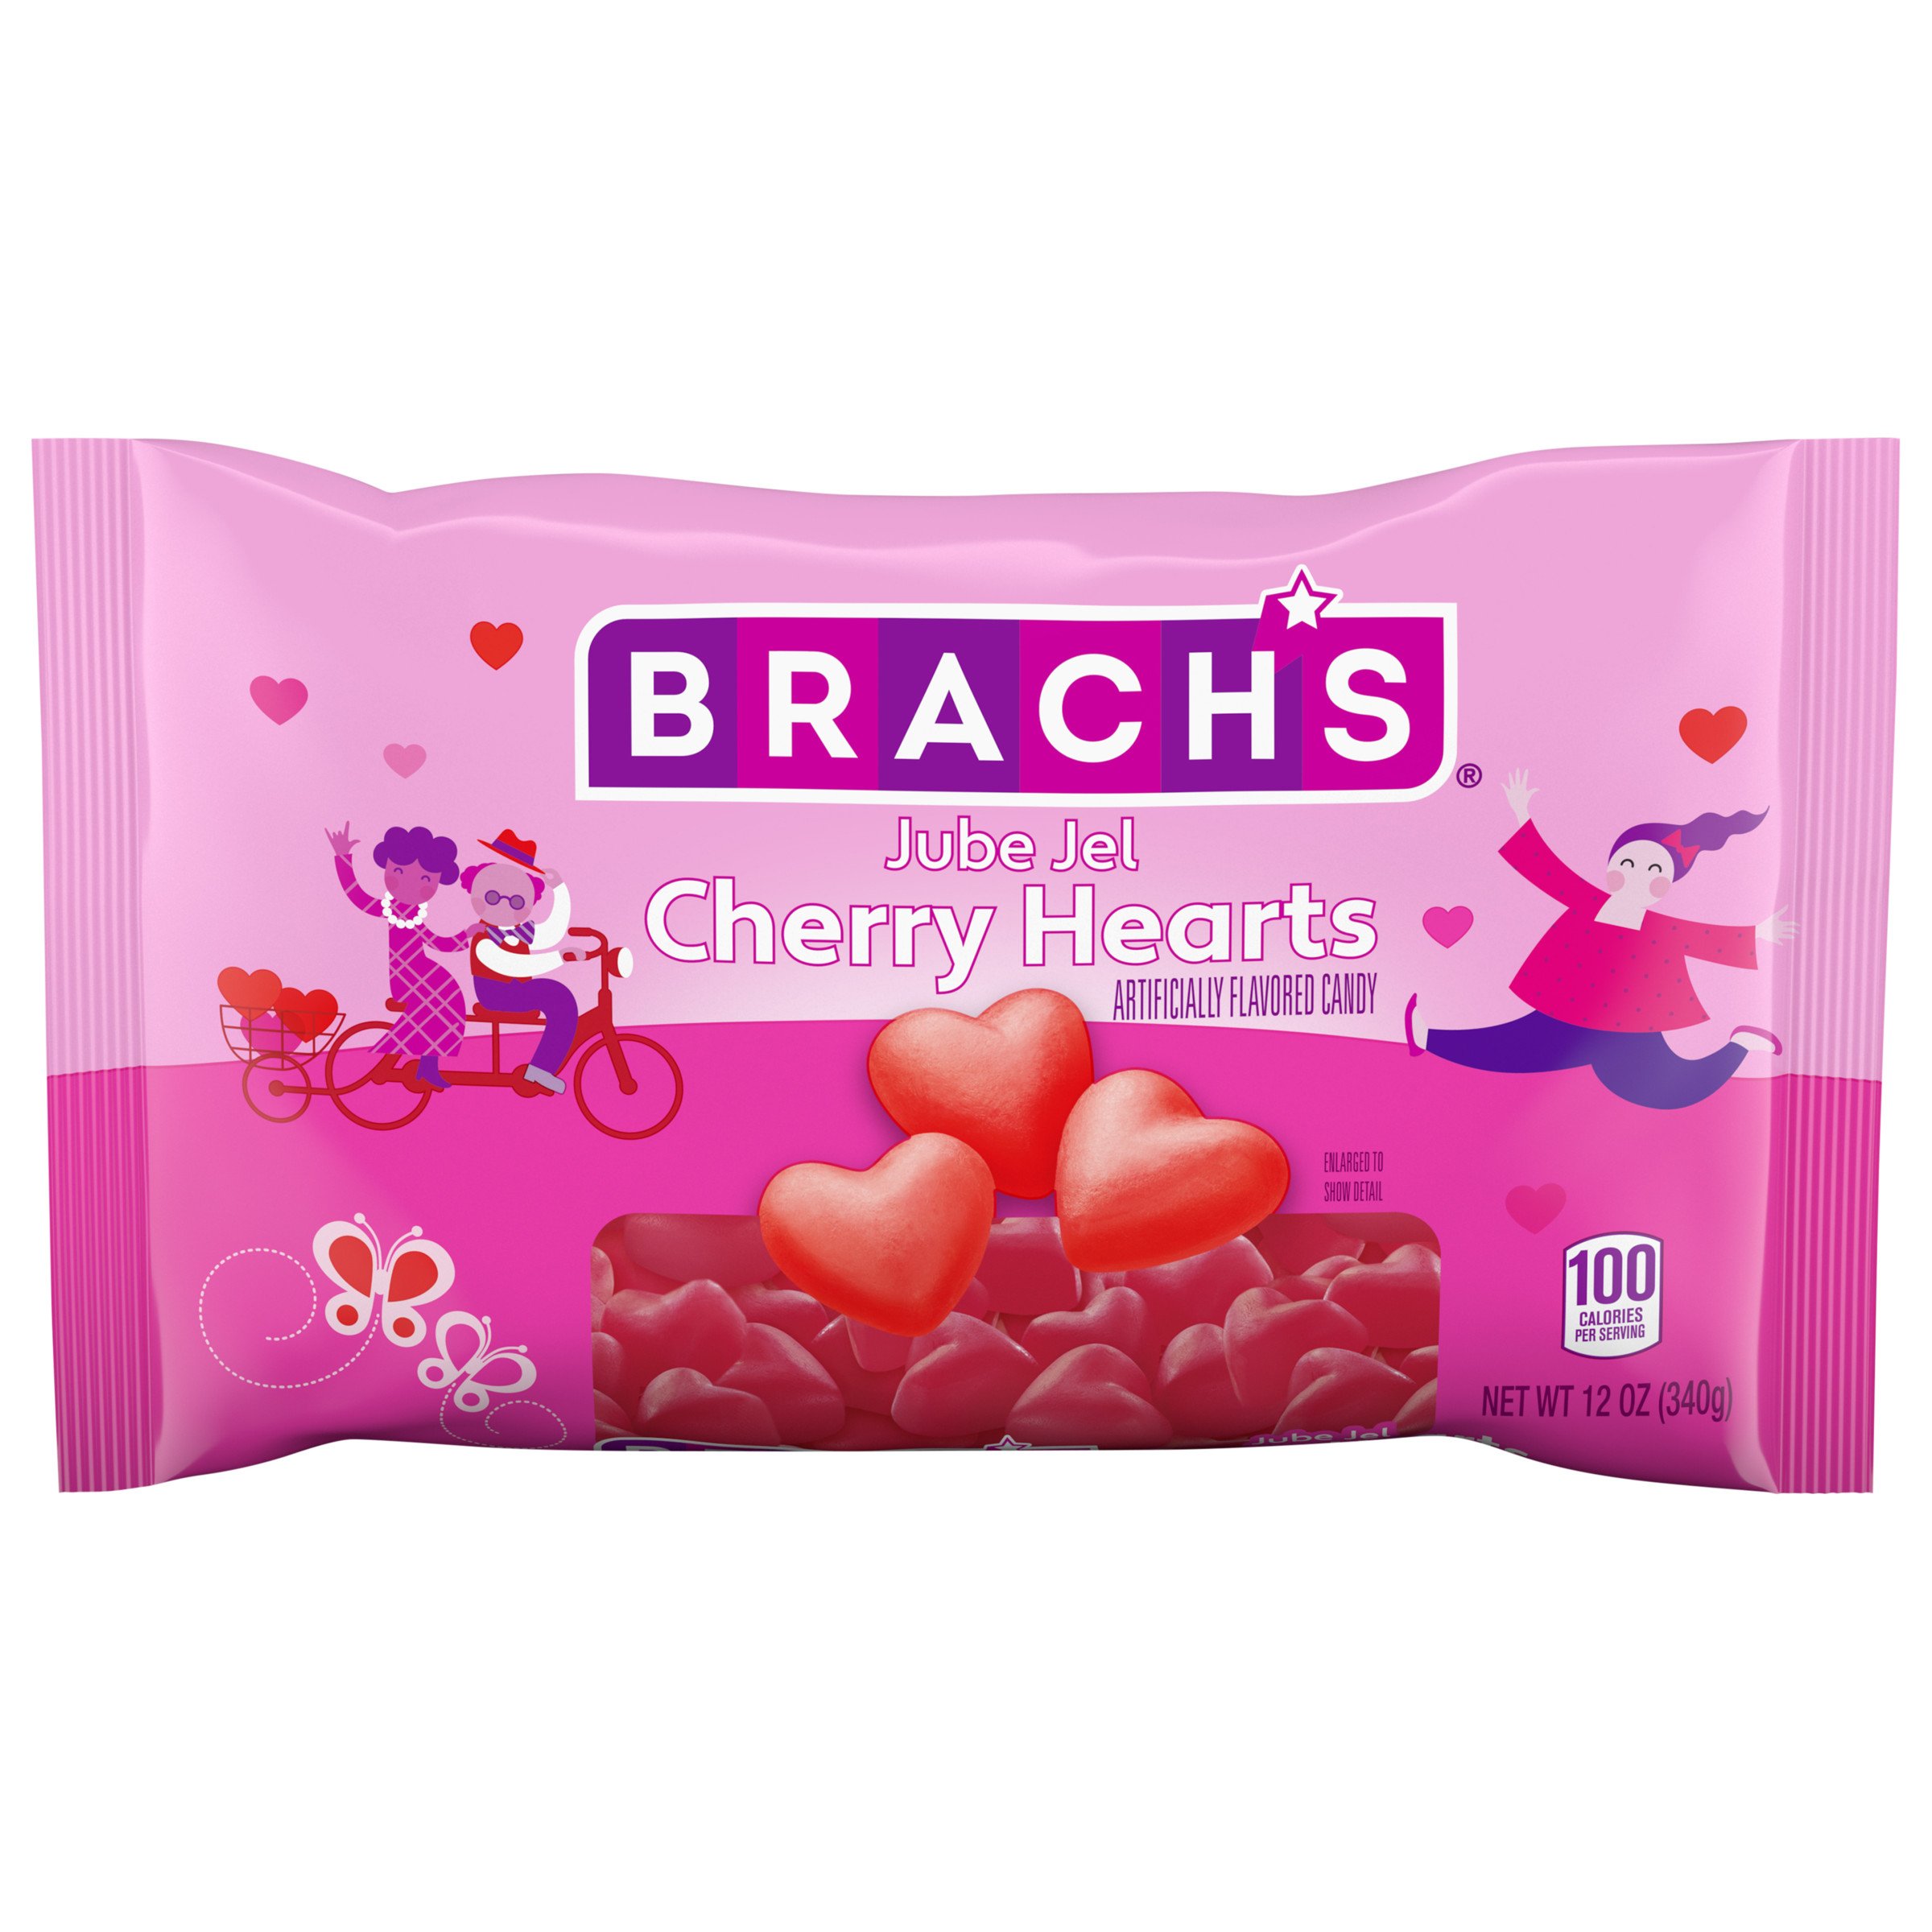 Brach's Jube Jel Cherry Hearts Valentine's Candy - Shop Candy at H-E-B